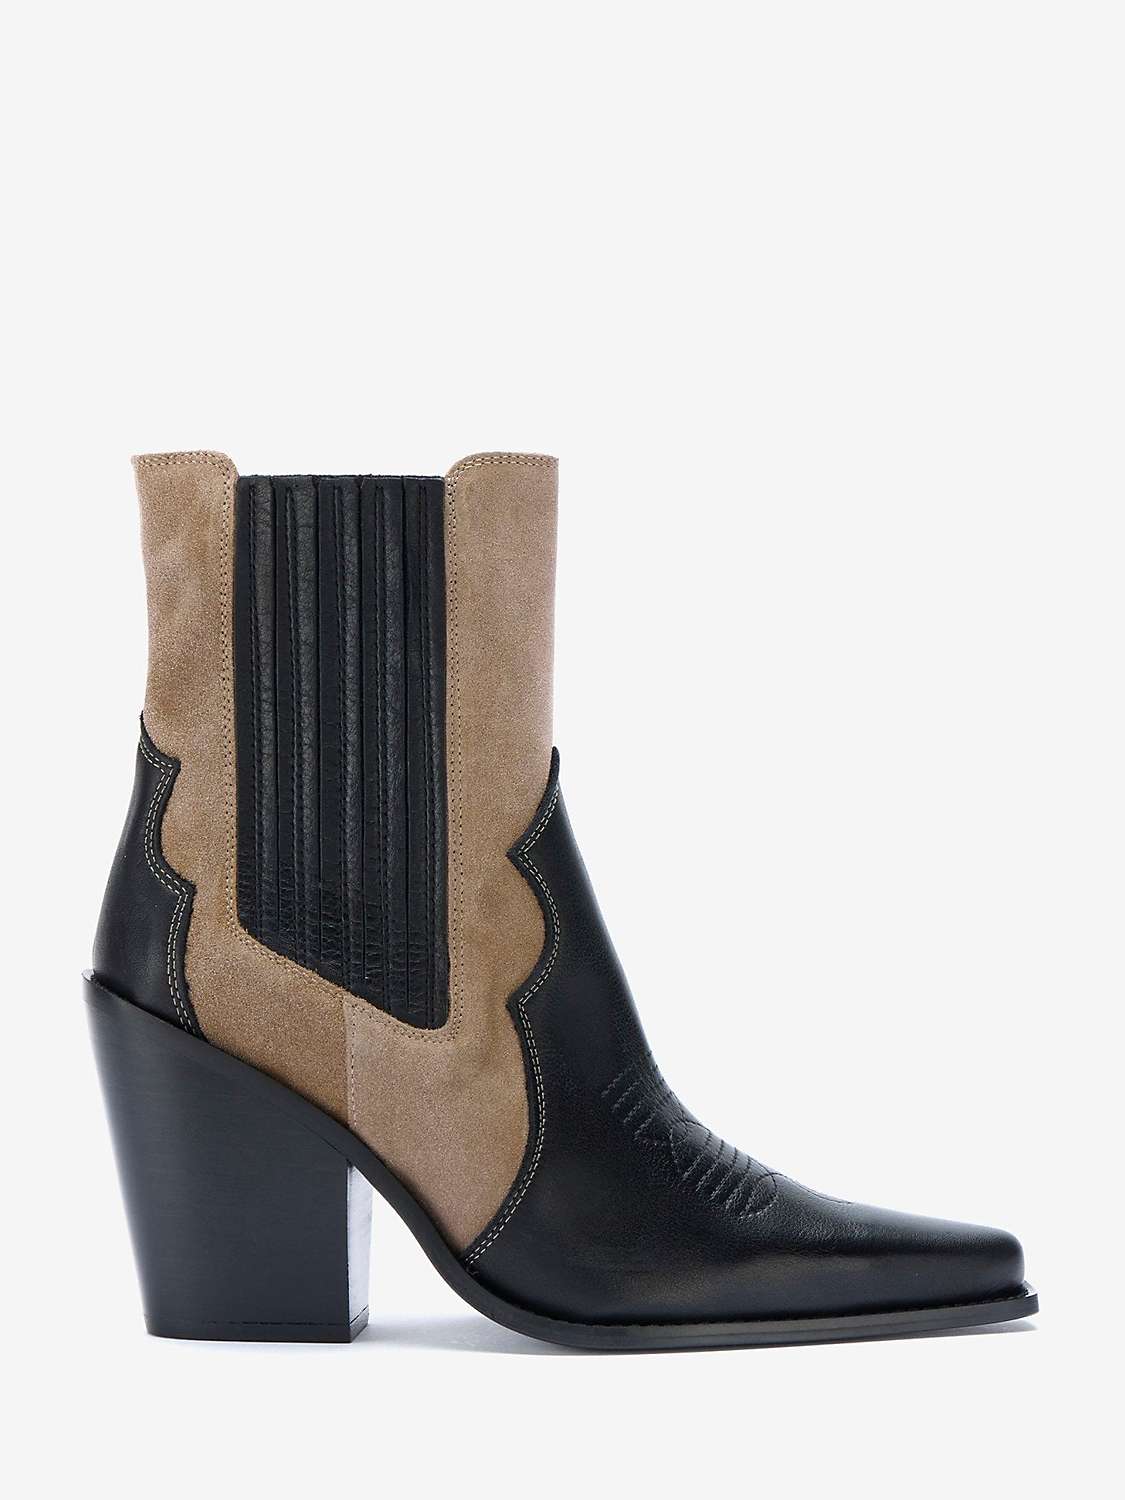 Buy Mint Velvet Leather and Suede Cowboy Boots, Black/Camel Online at johnlewis.com